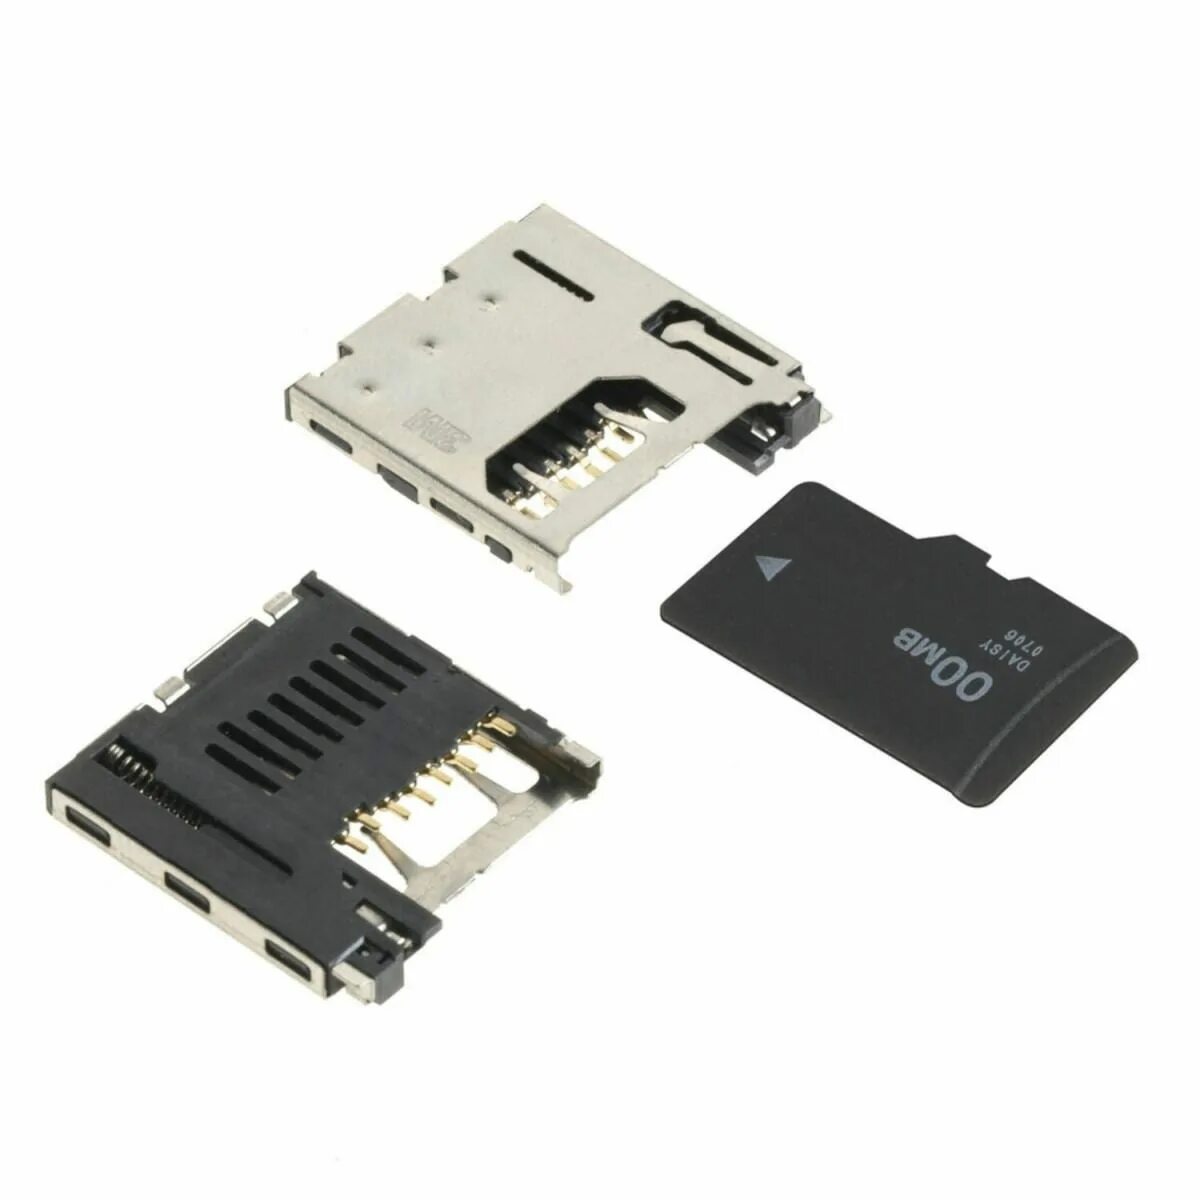 SMT разъем SD. MICROSD Connector. Гнездо для SD-карты 5d85. Разъем для MICROSD Card с защелкой.